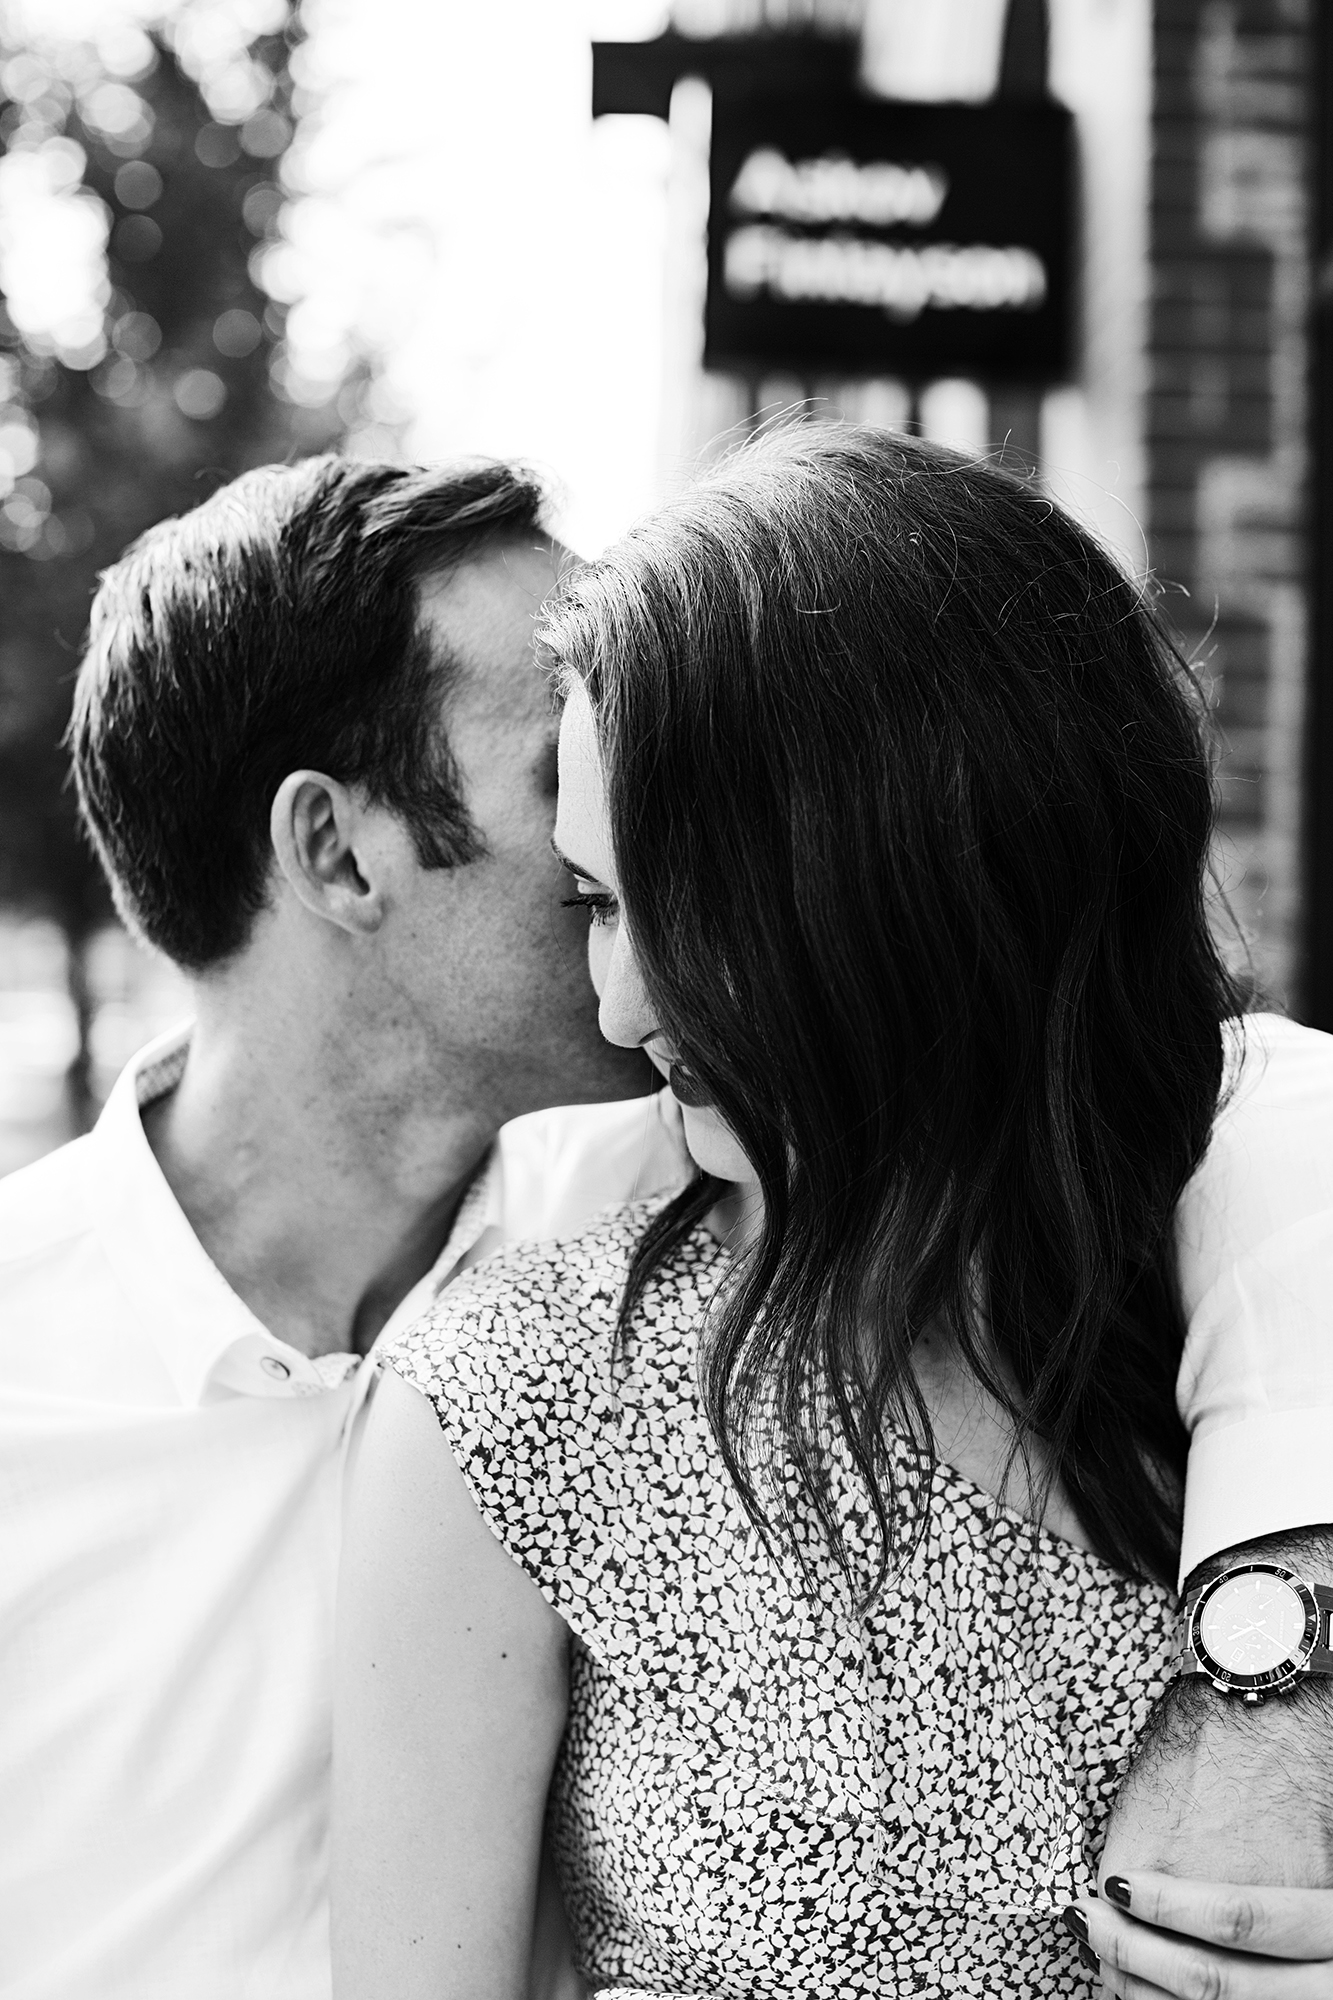 Engagement Photos | Photography by Photogen Inc. | Eliesa Johnson | Based in Minneapolis, Minnesota